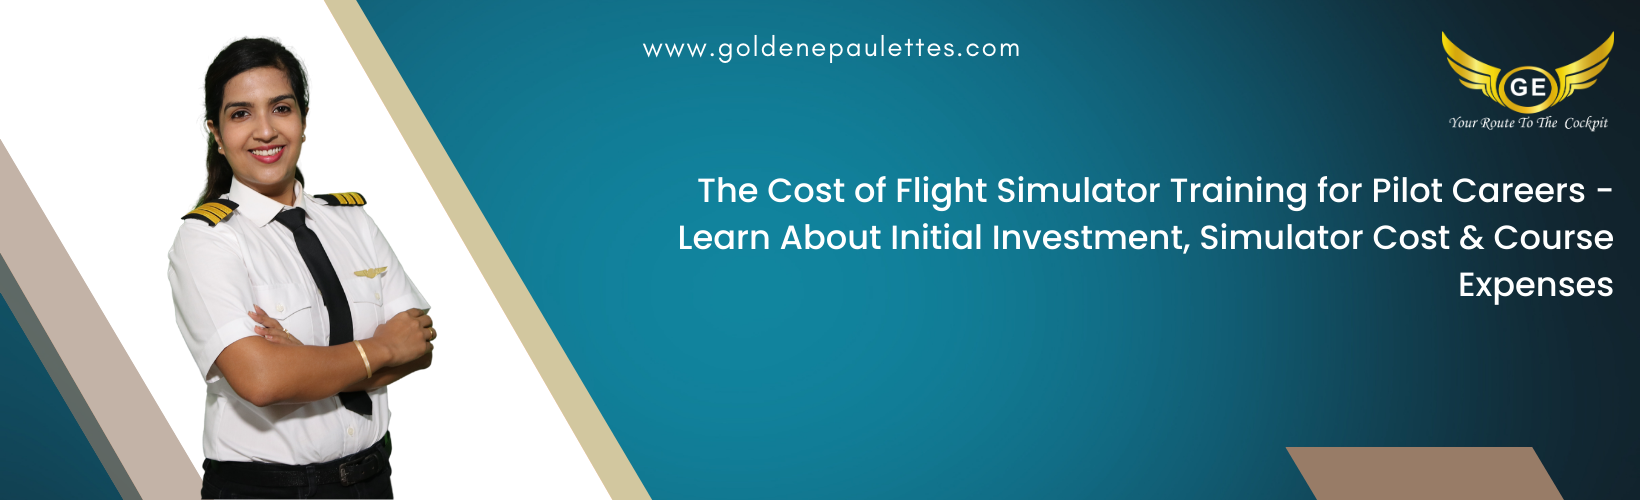 The Cost of Flight Simulator Training